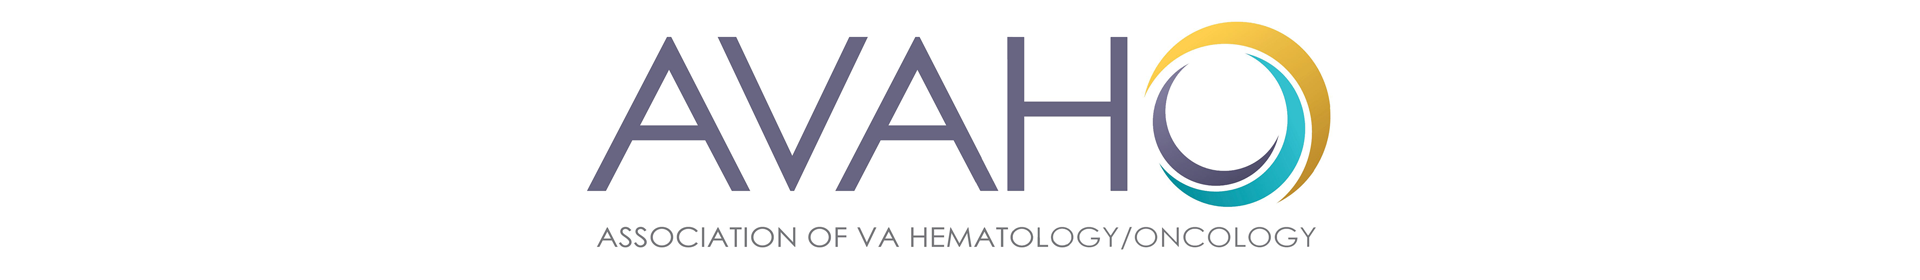 Association of VA Hematology/Oncology